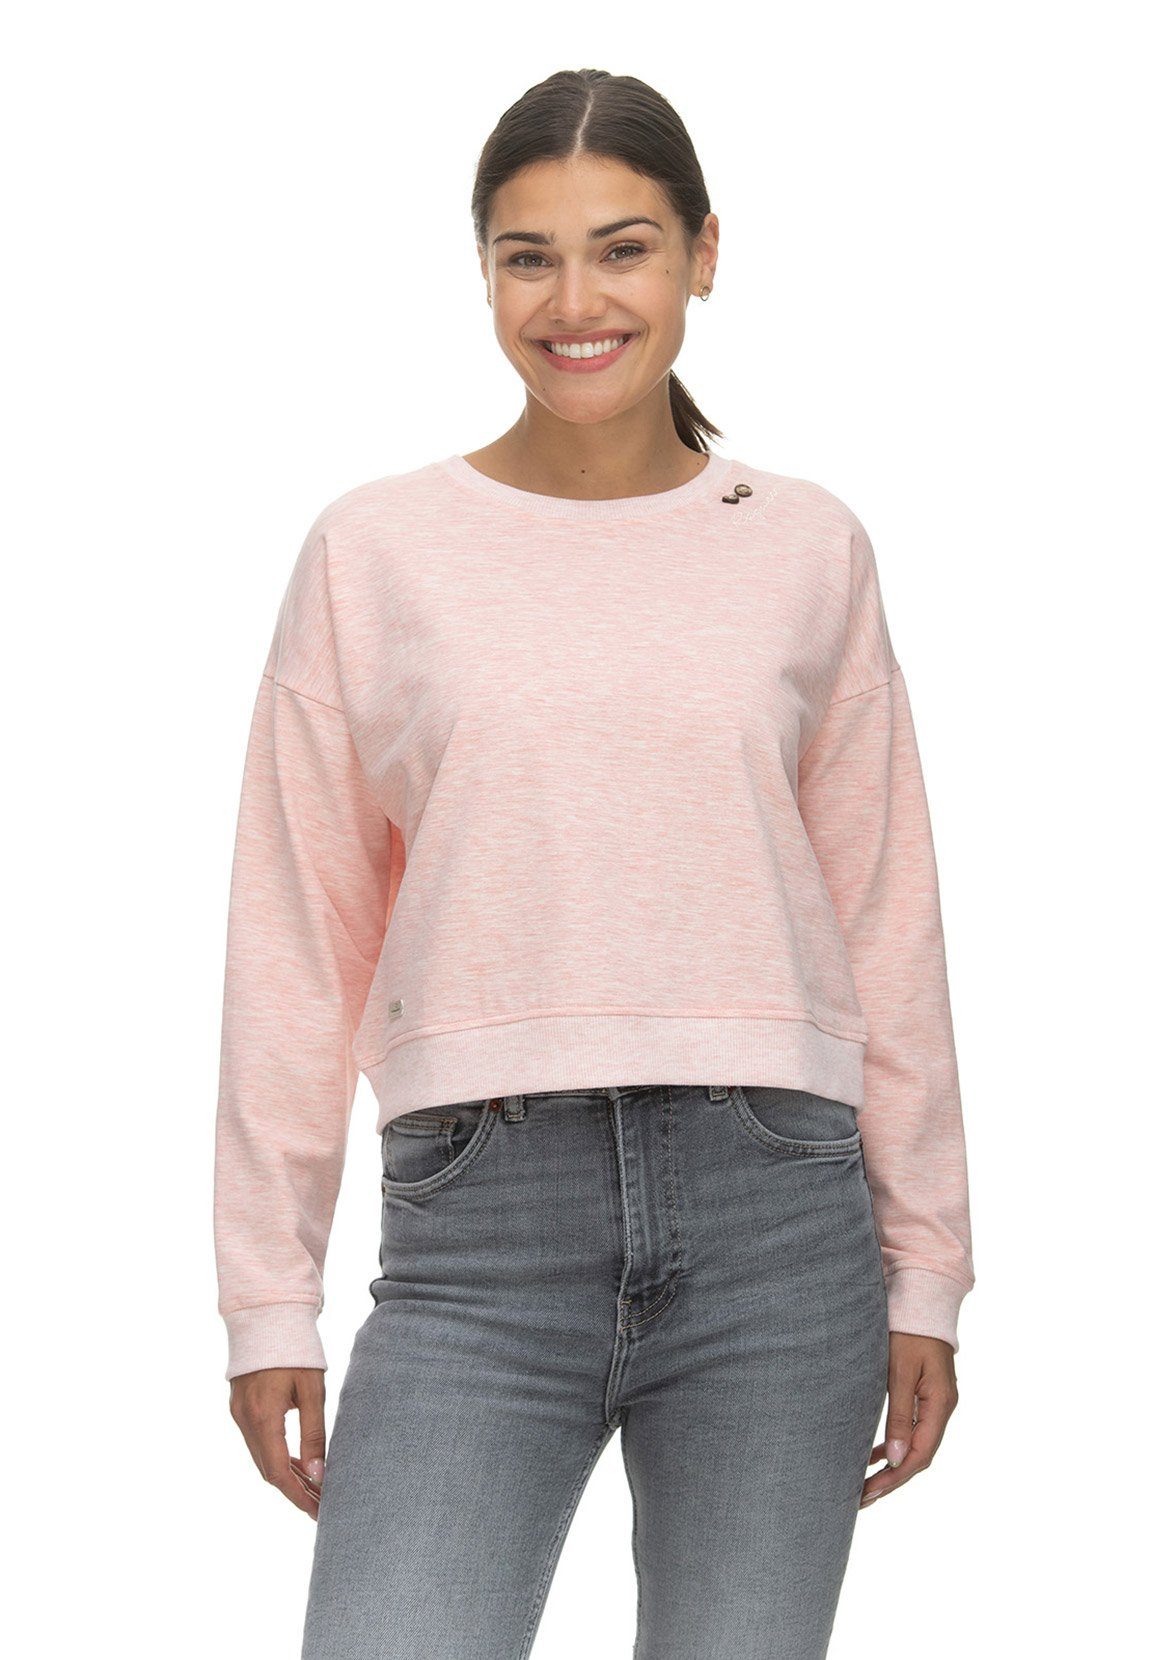 Light Pink Sweater 2311-30002 BLESED 4063 Sweater Damen Rosa Ragwear Ragwear